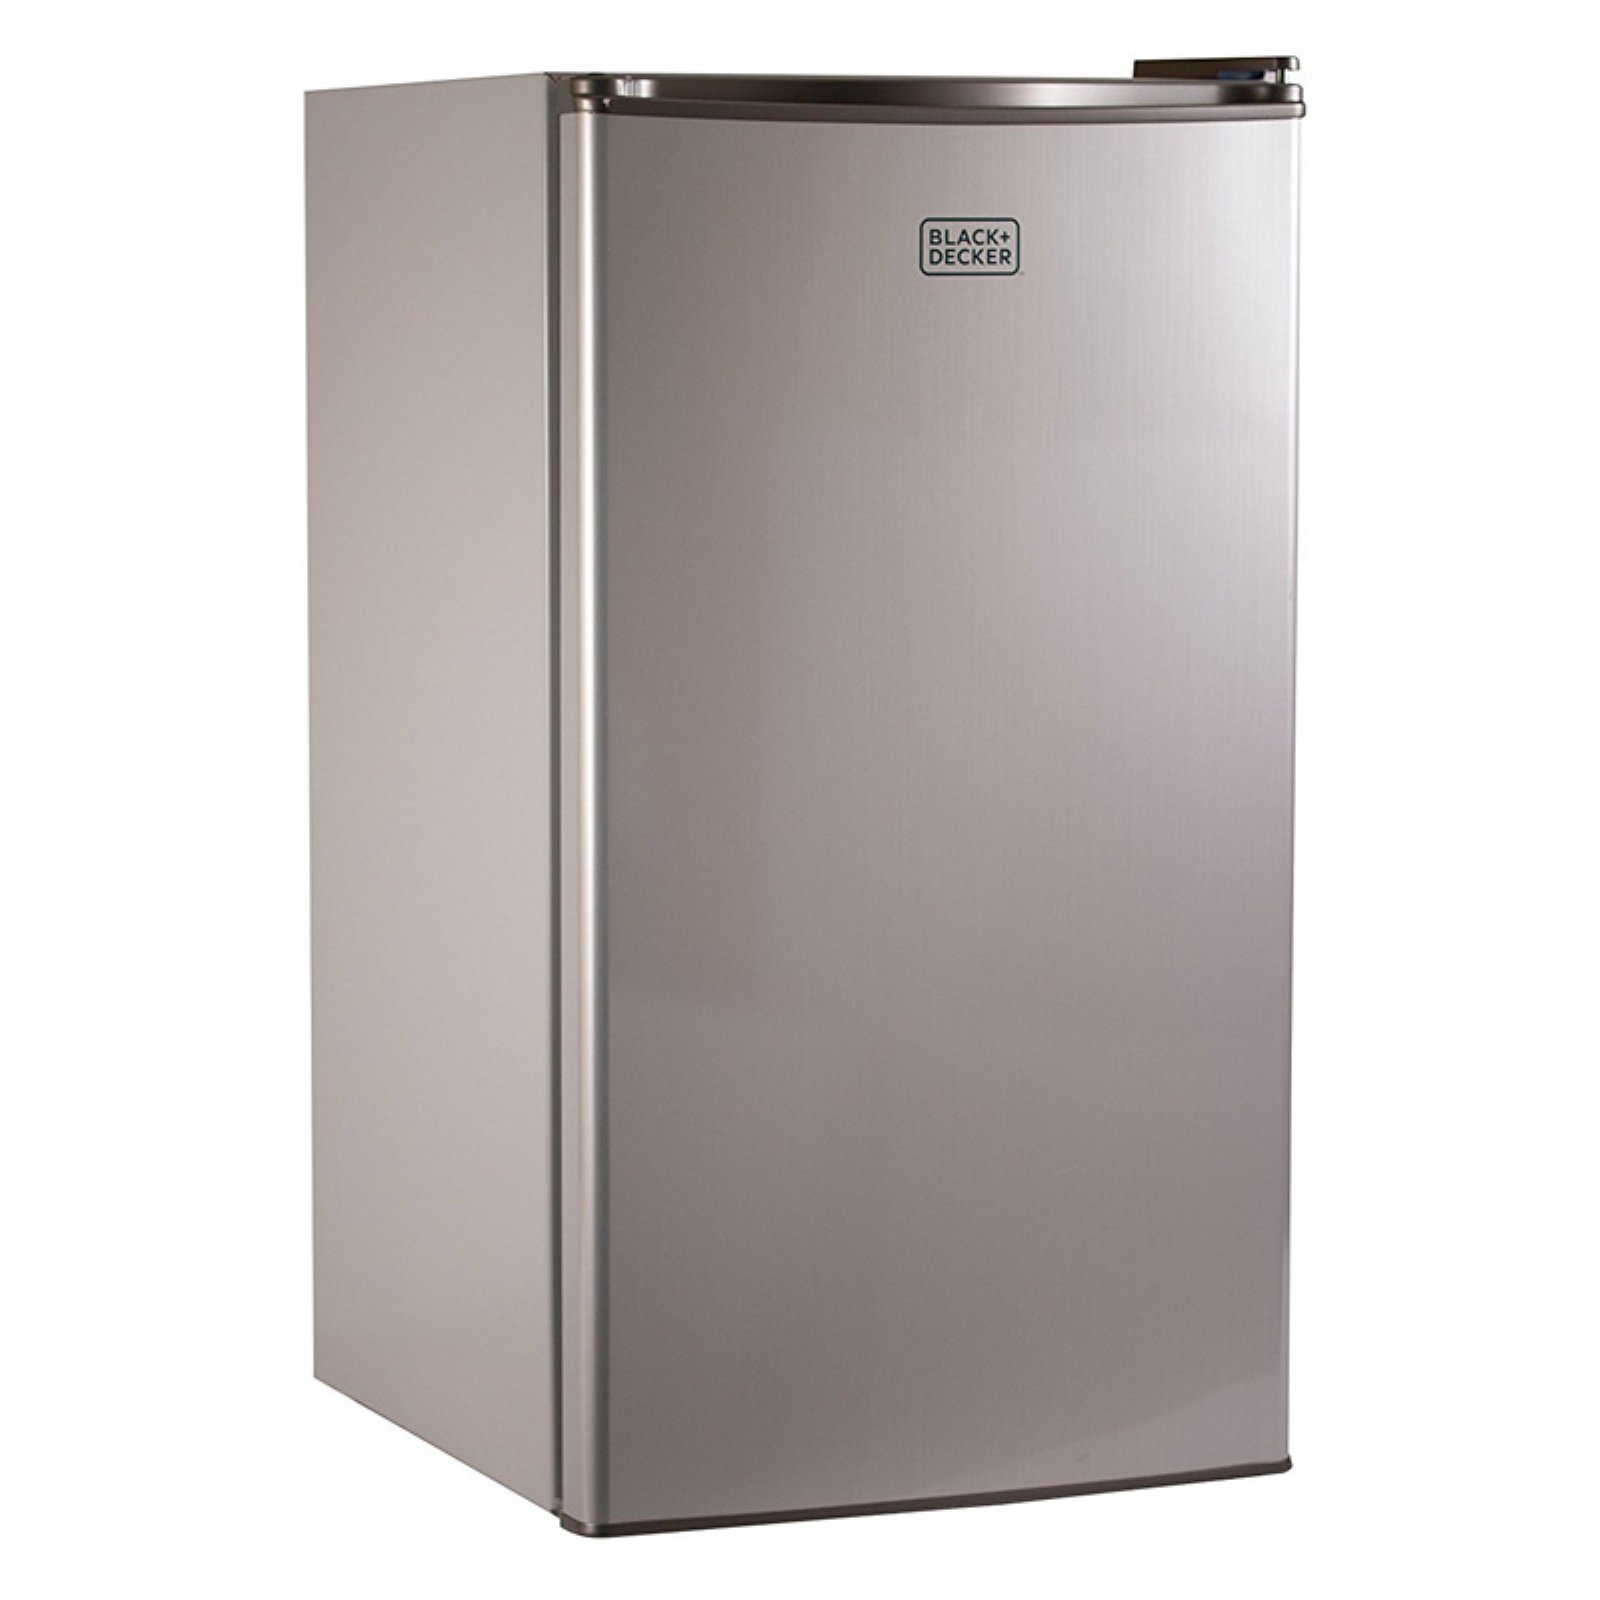 BLACK+DECKER BCRK32V Compact Refrigerator Energy Star Single Door Mini Fridge with Freezer, 3.2 cu. ft., Silver - image 5 of 6